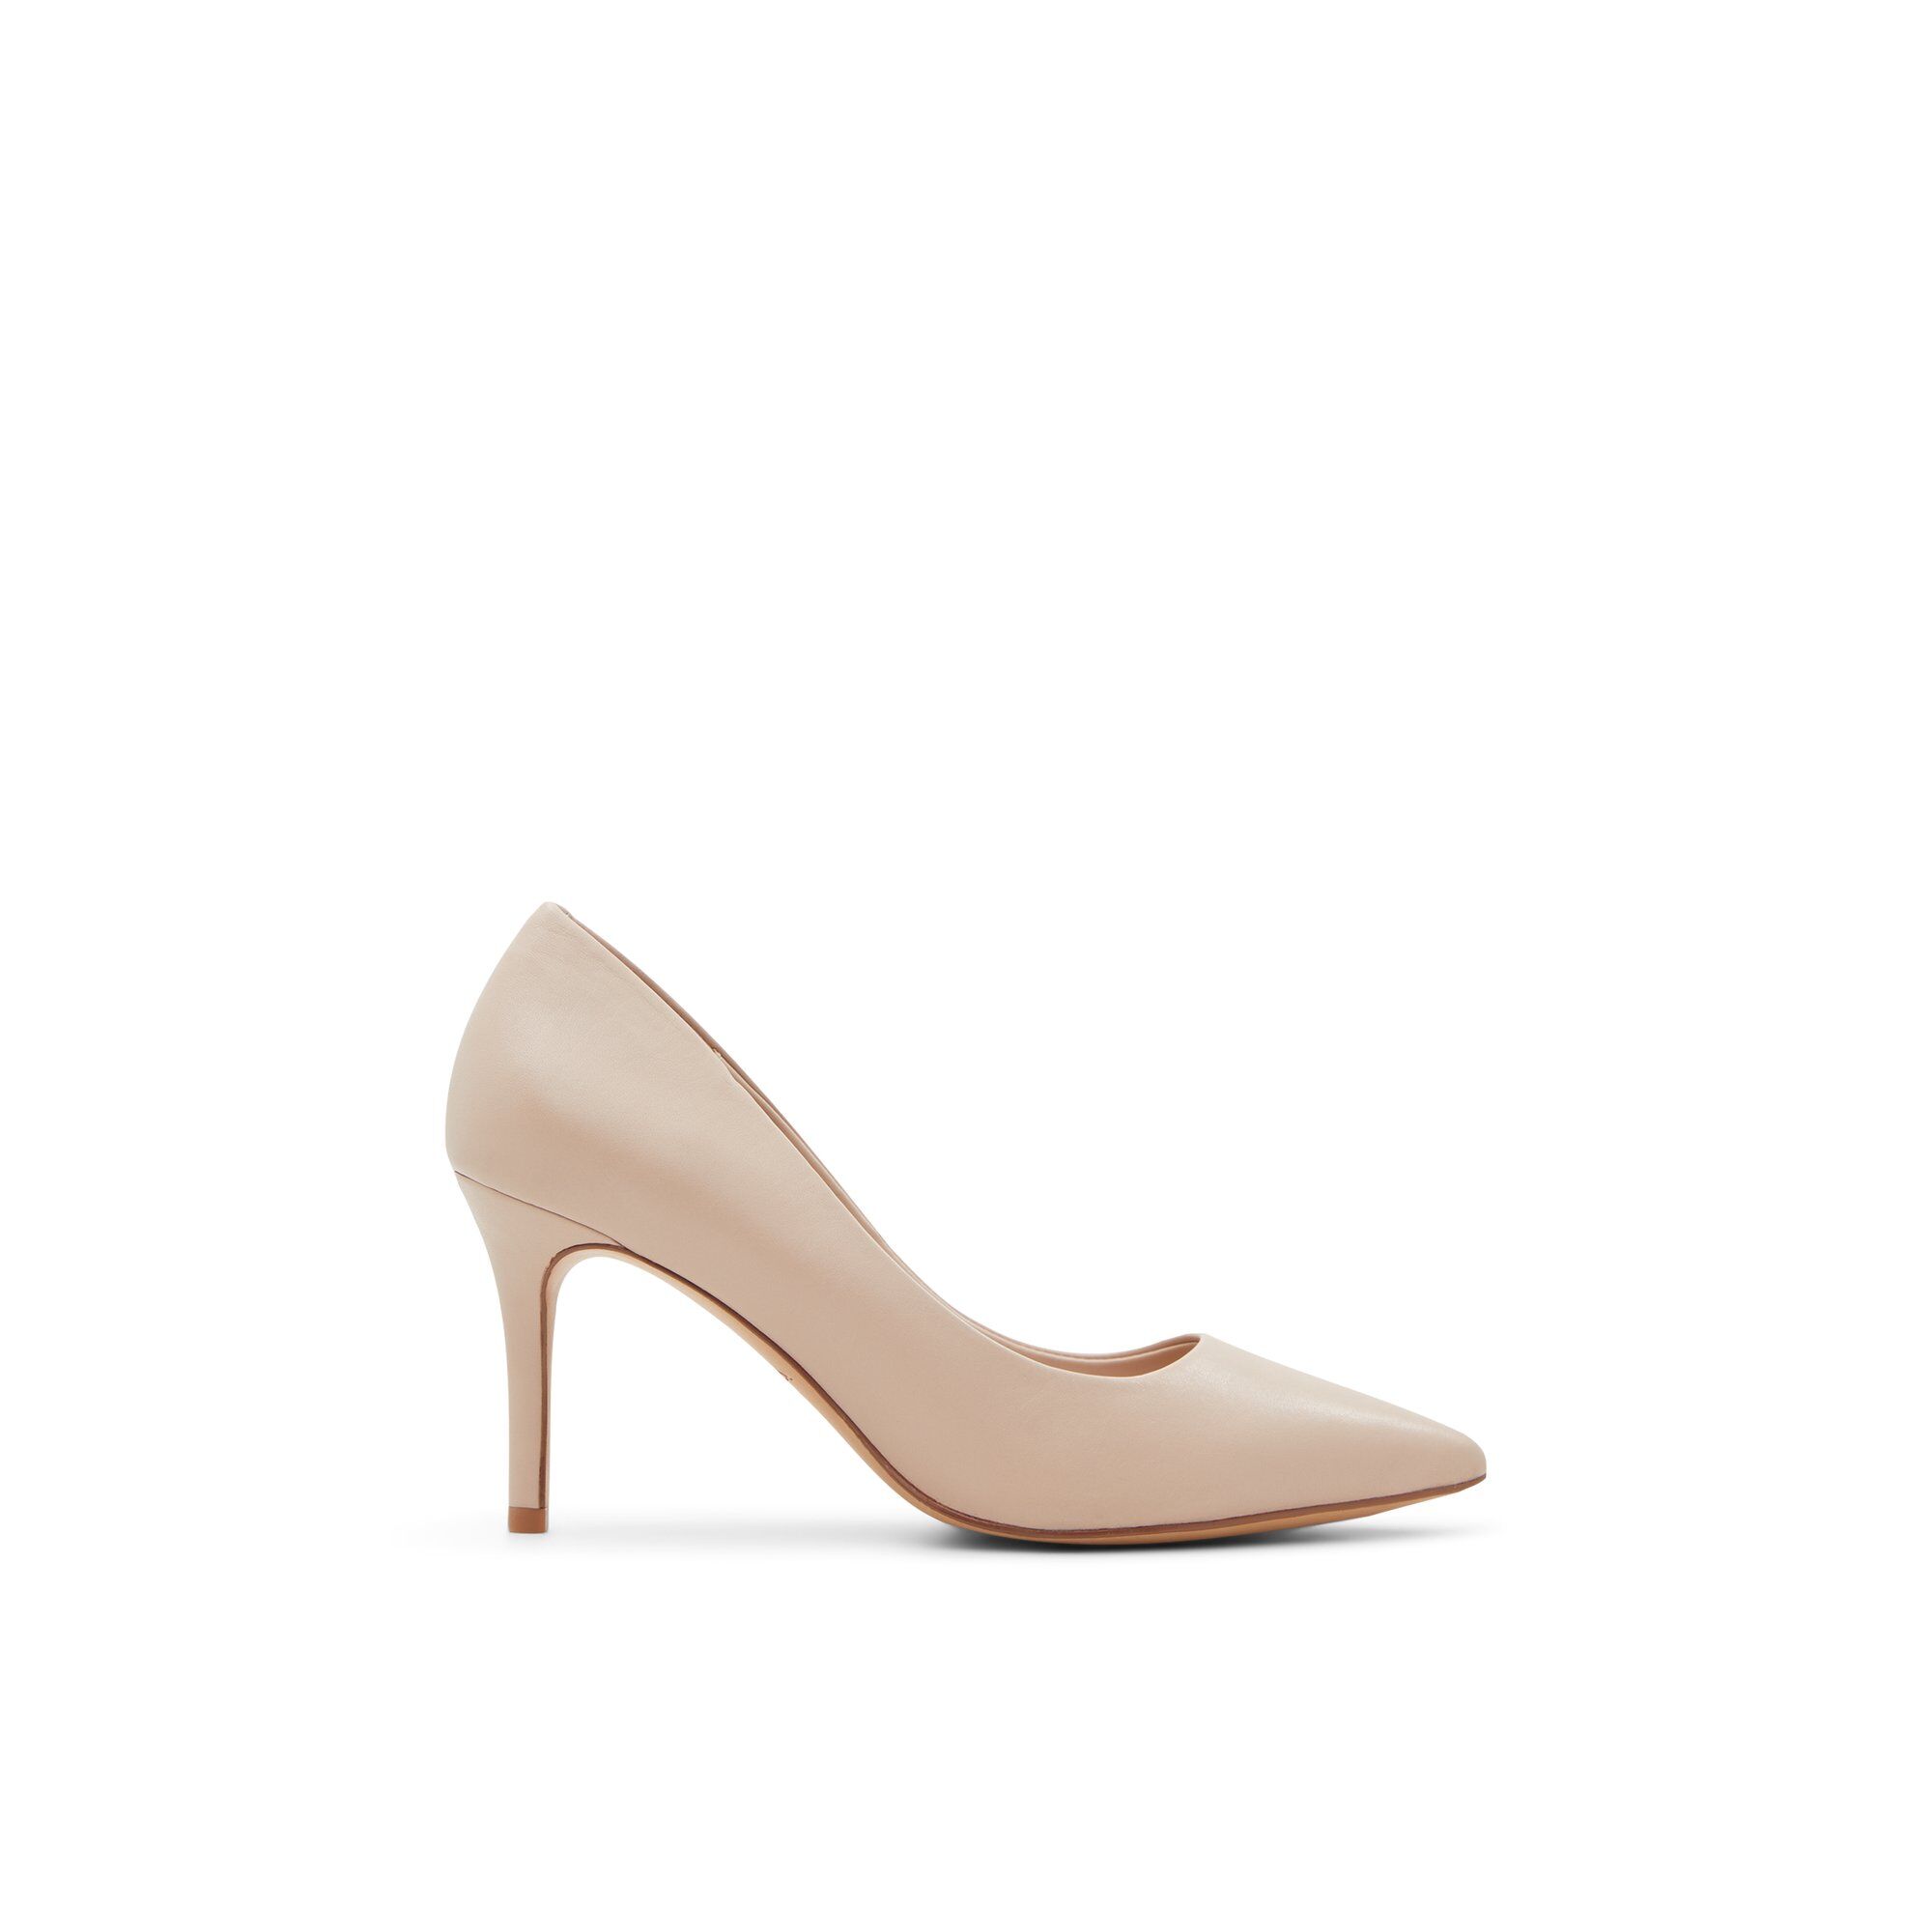 ALDO Sereniti - Women's Heel - Beige, Size 11